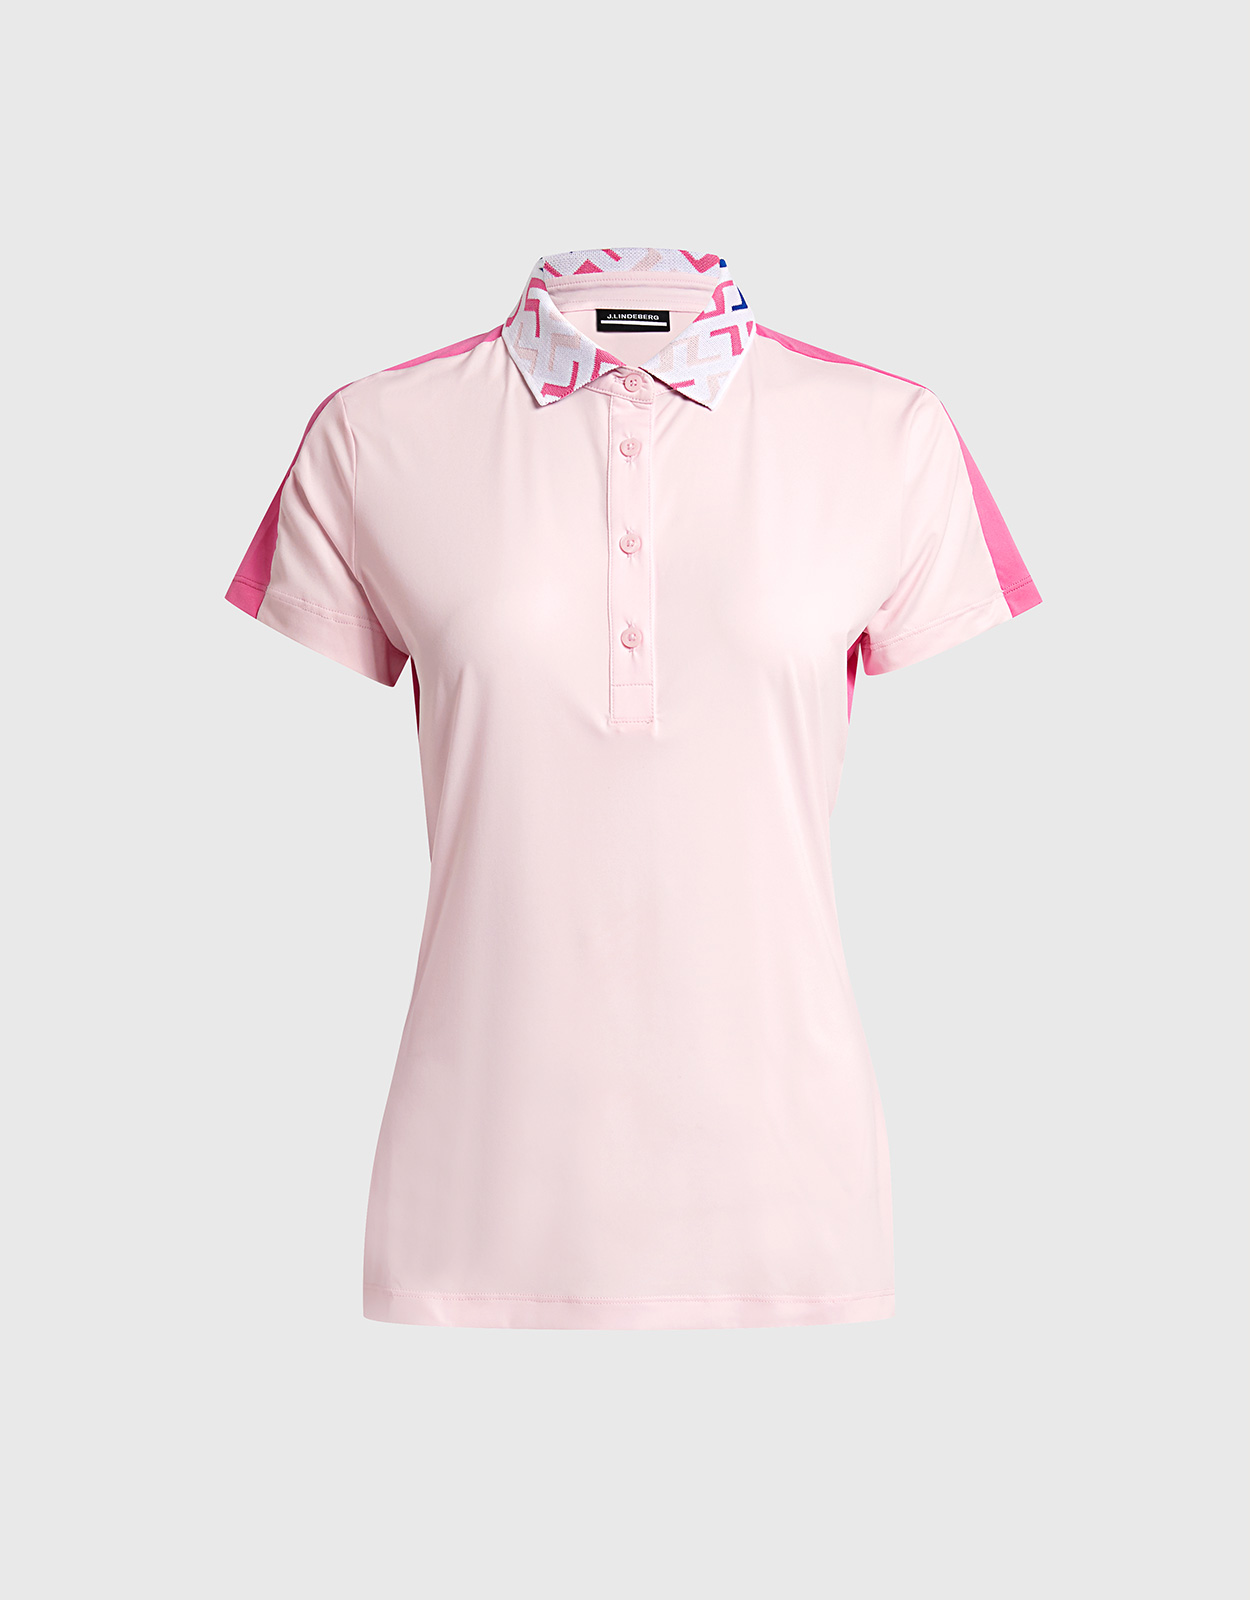 J.Lindeberg Women's Tilda Polo Shirt (Tops,Short Sleeved) IFCHIC.COM